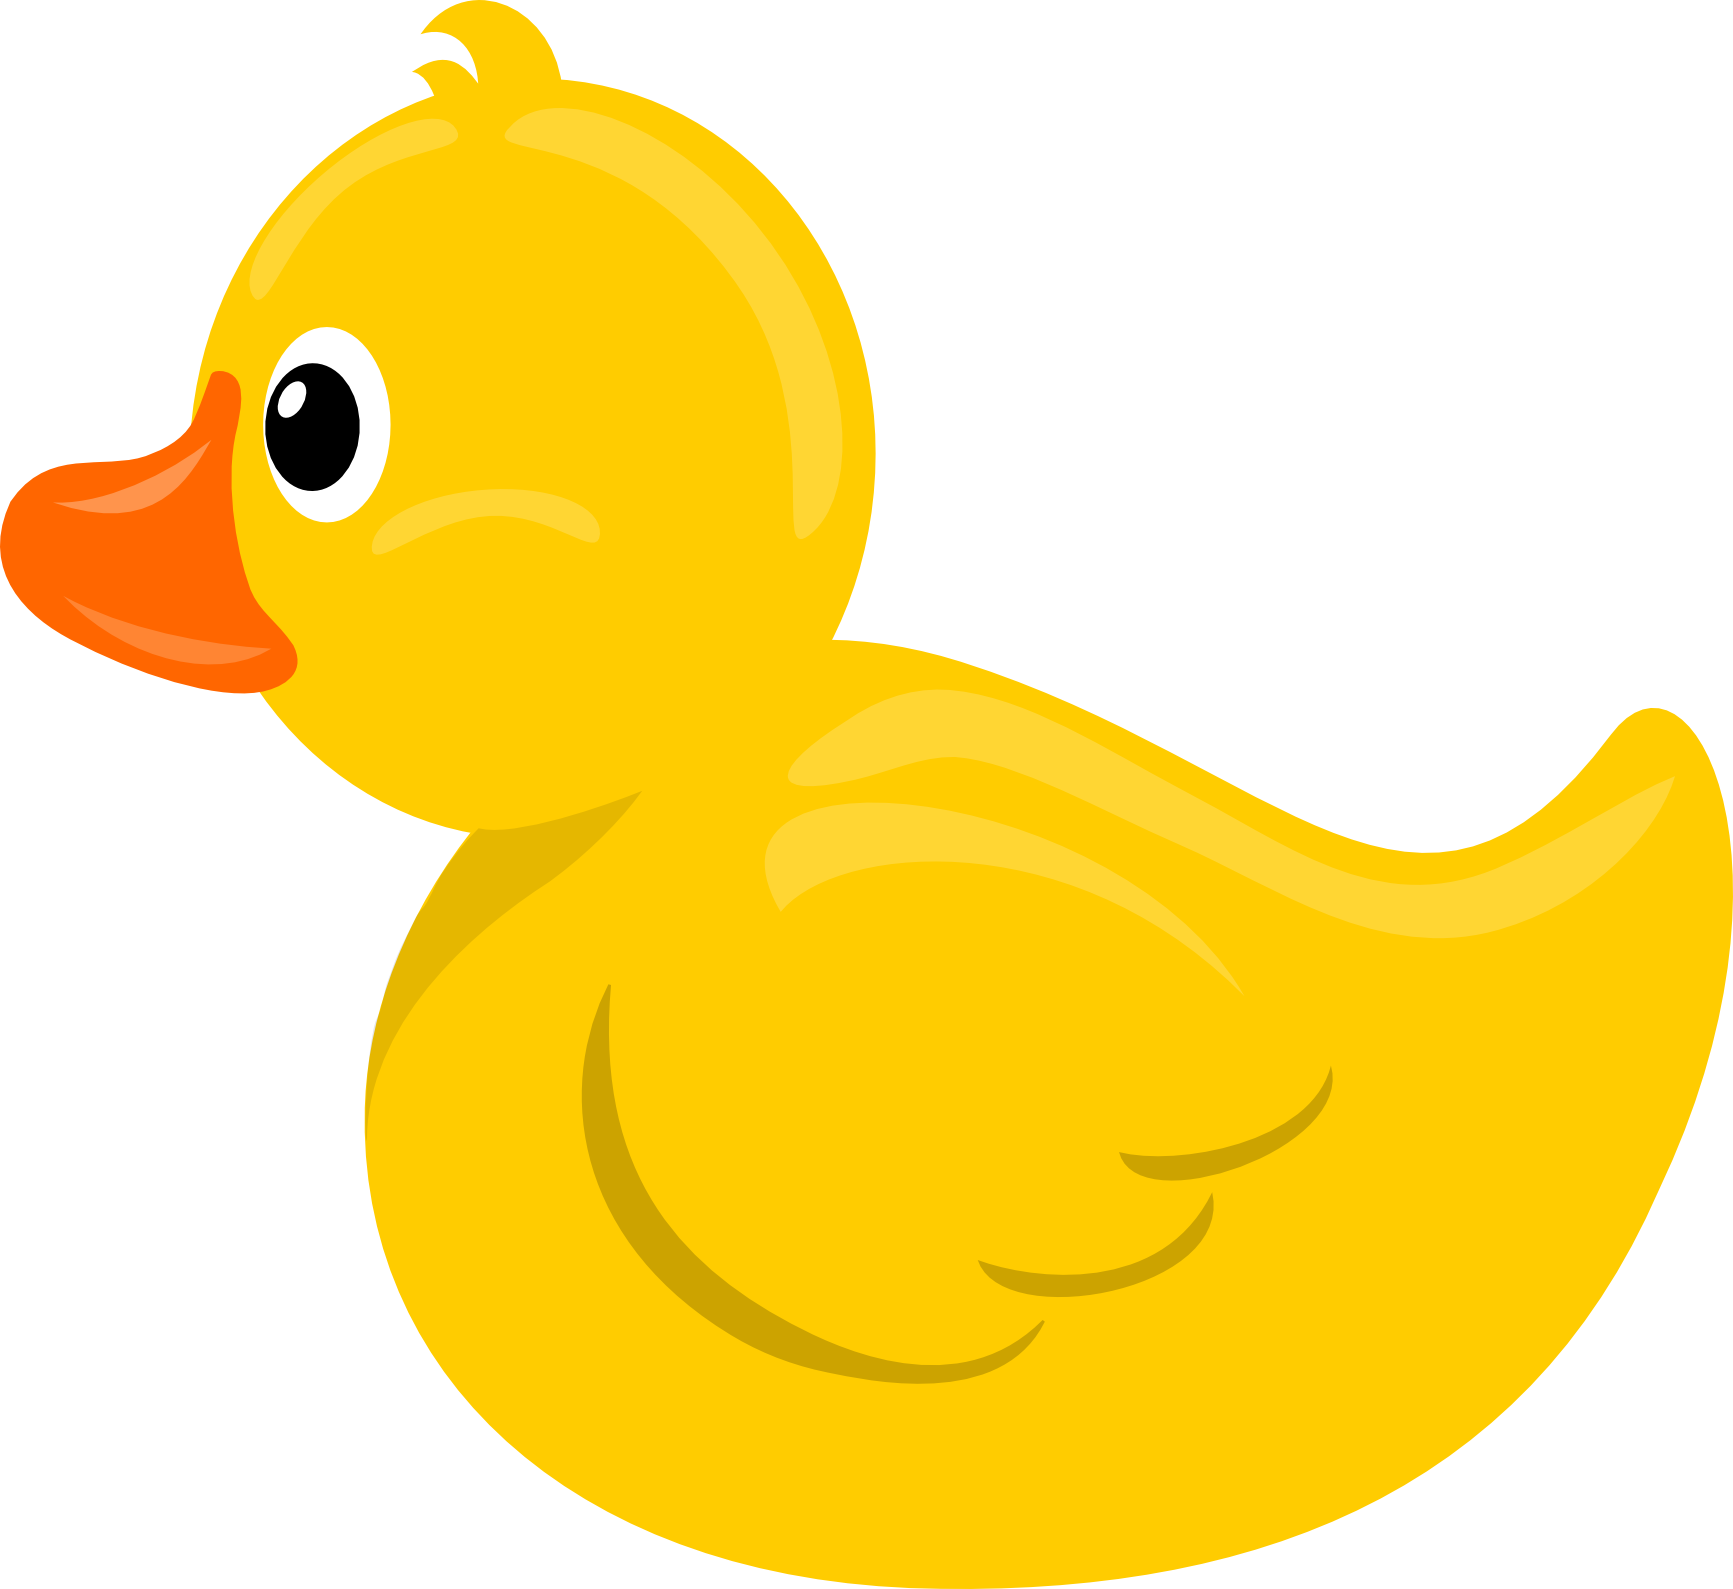 Rubber Ducky Clip Art - clipa - Rubber Ducky Clip Art